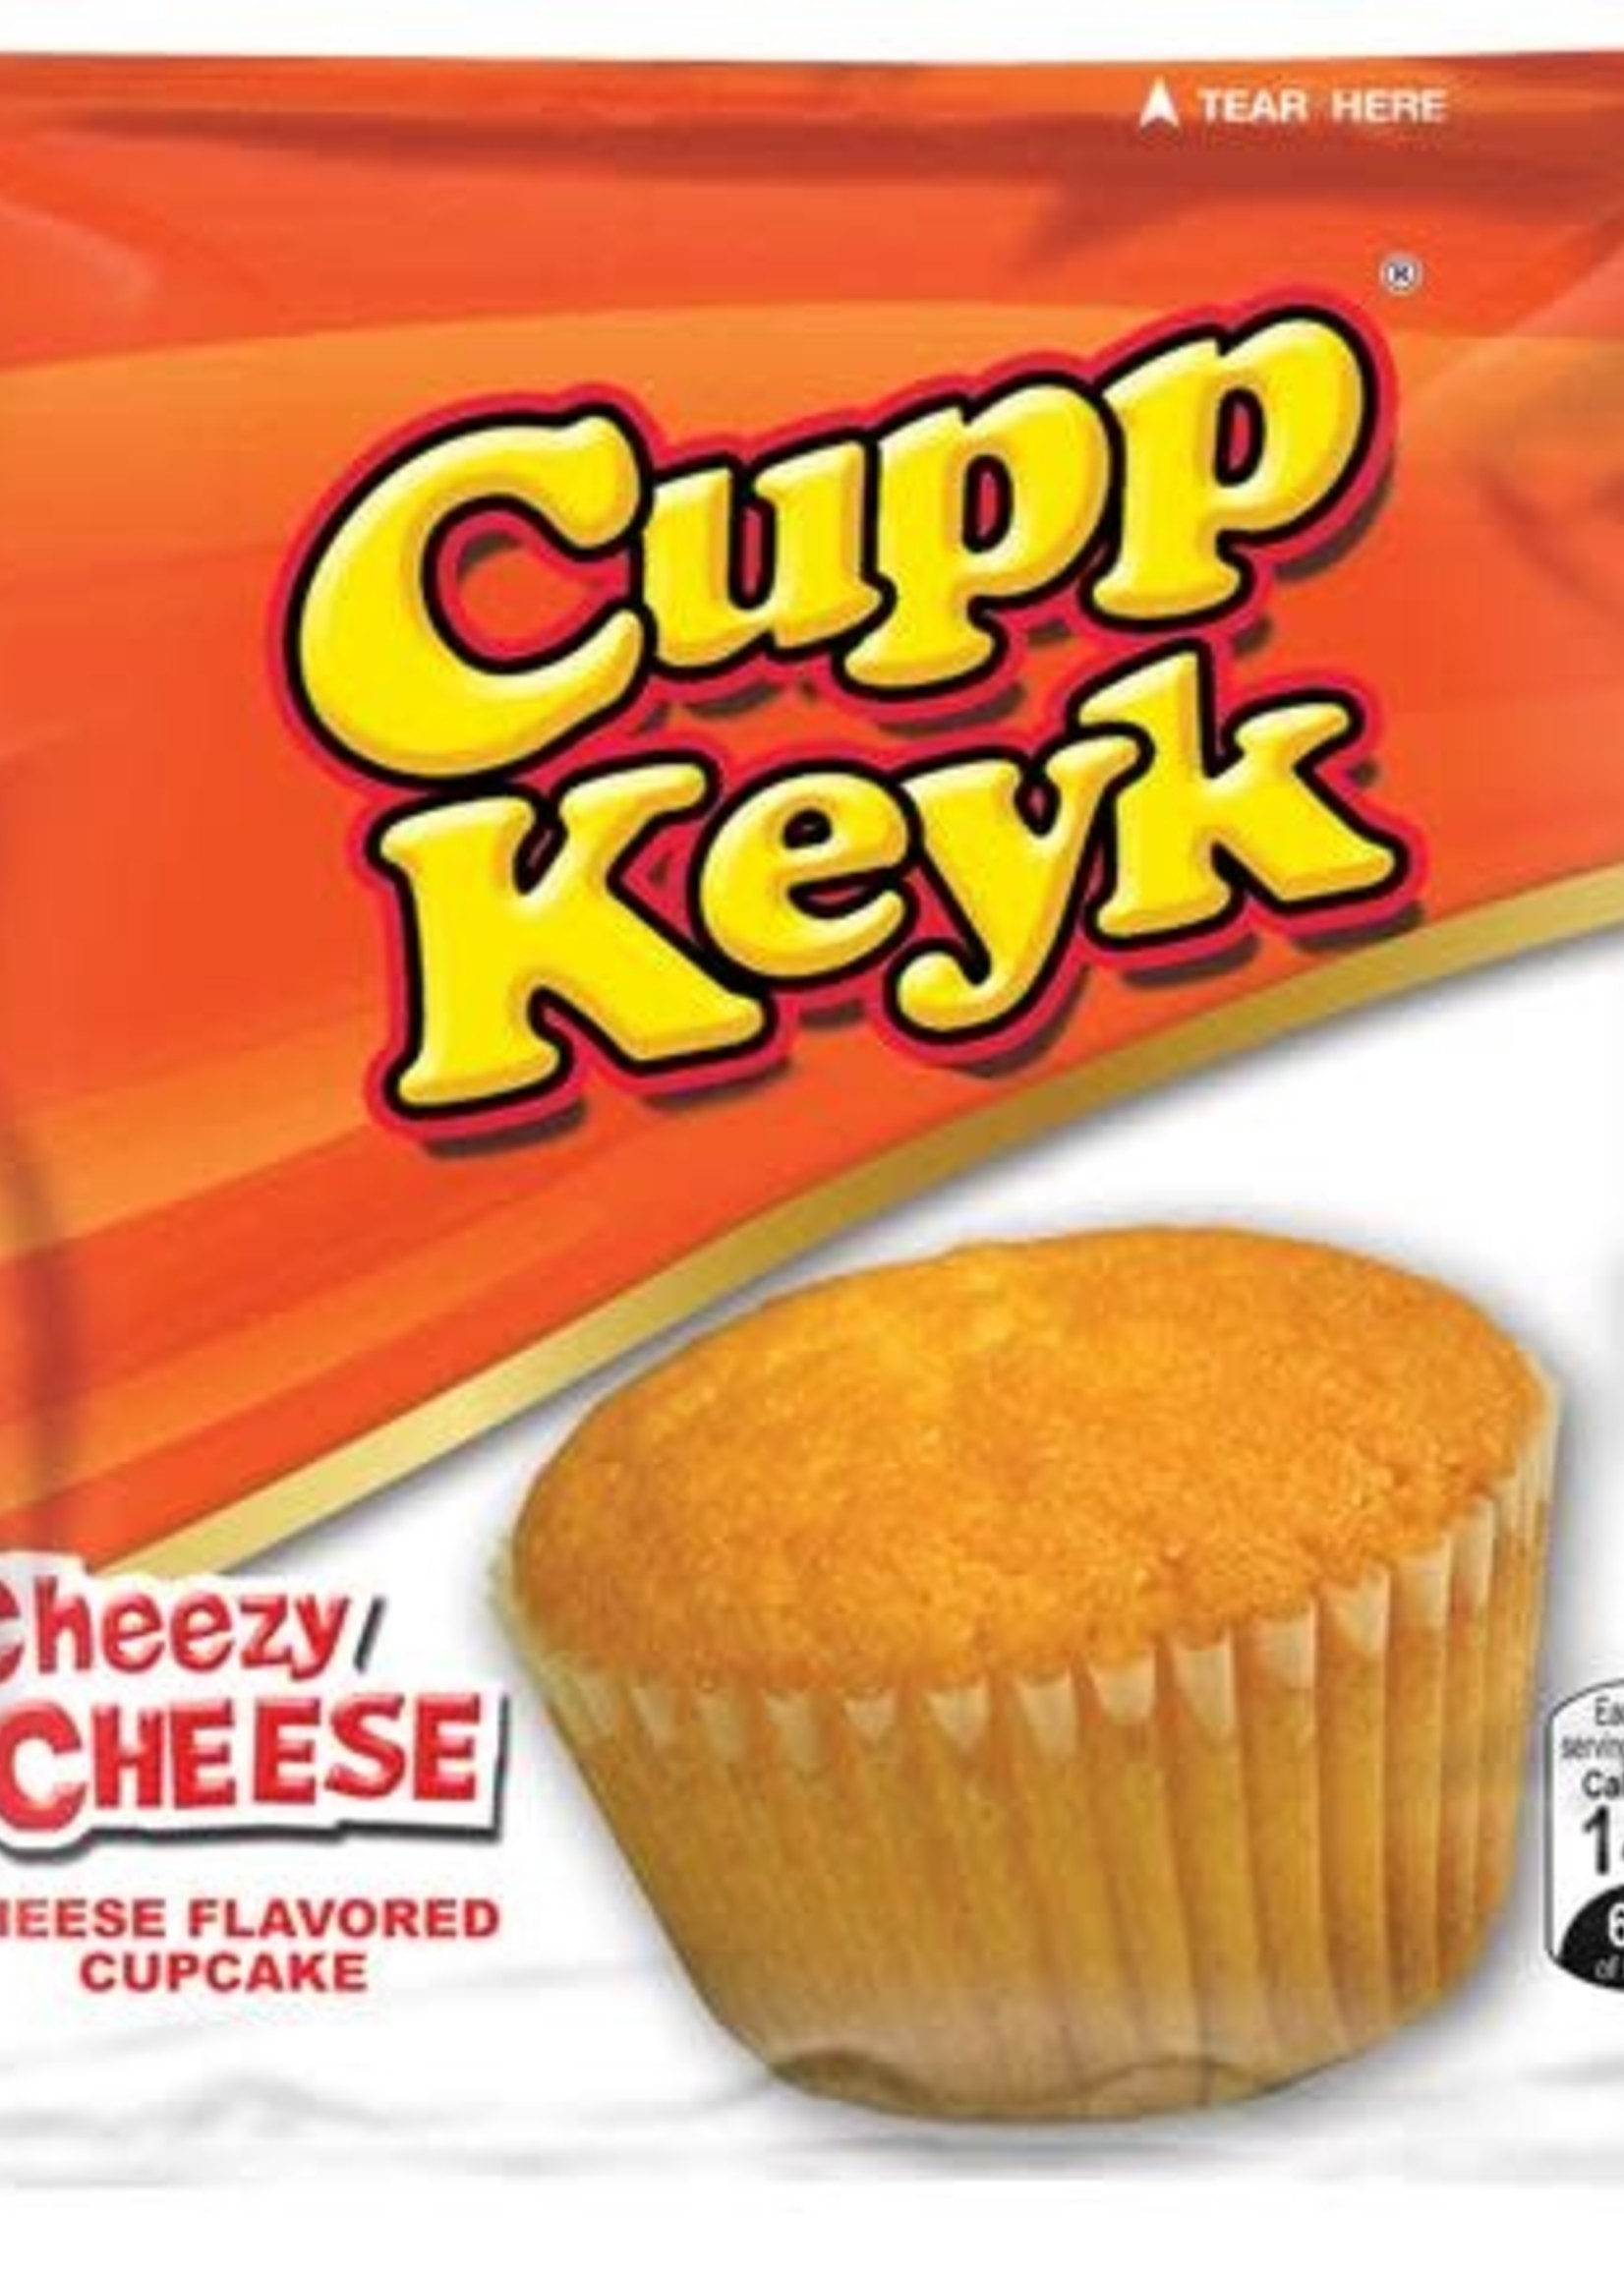 Suncrest Cupp keyk Cheesy Cheese 330g